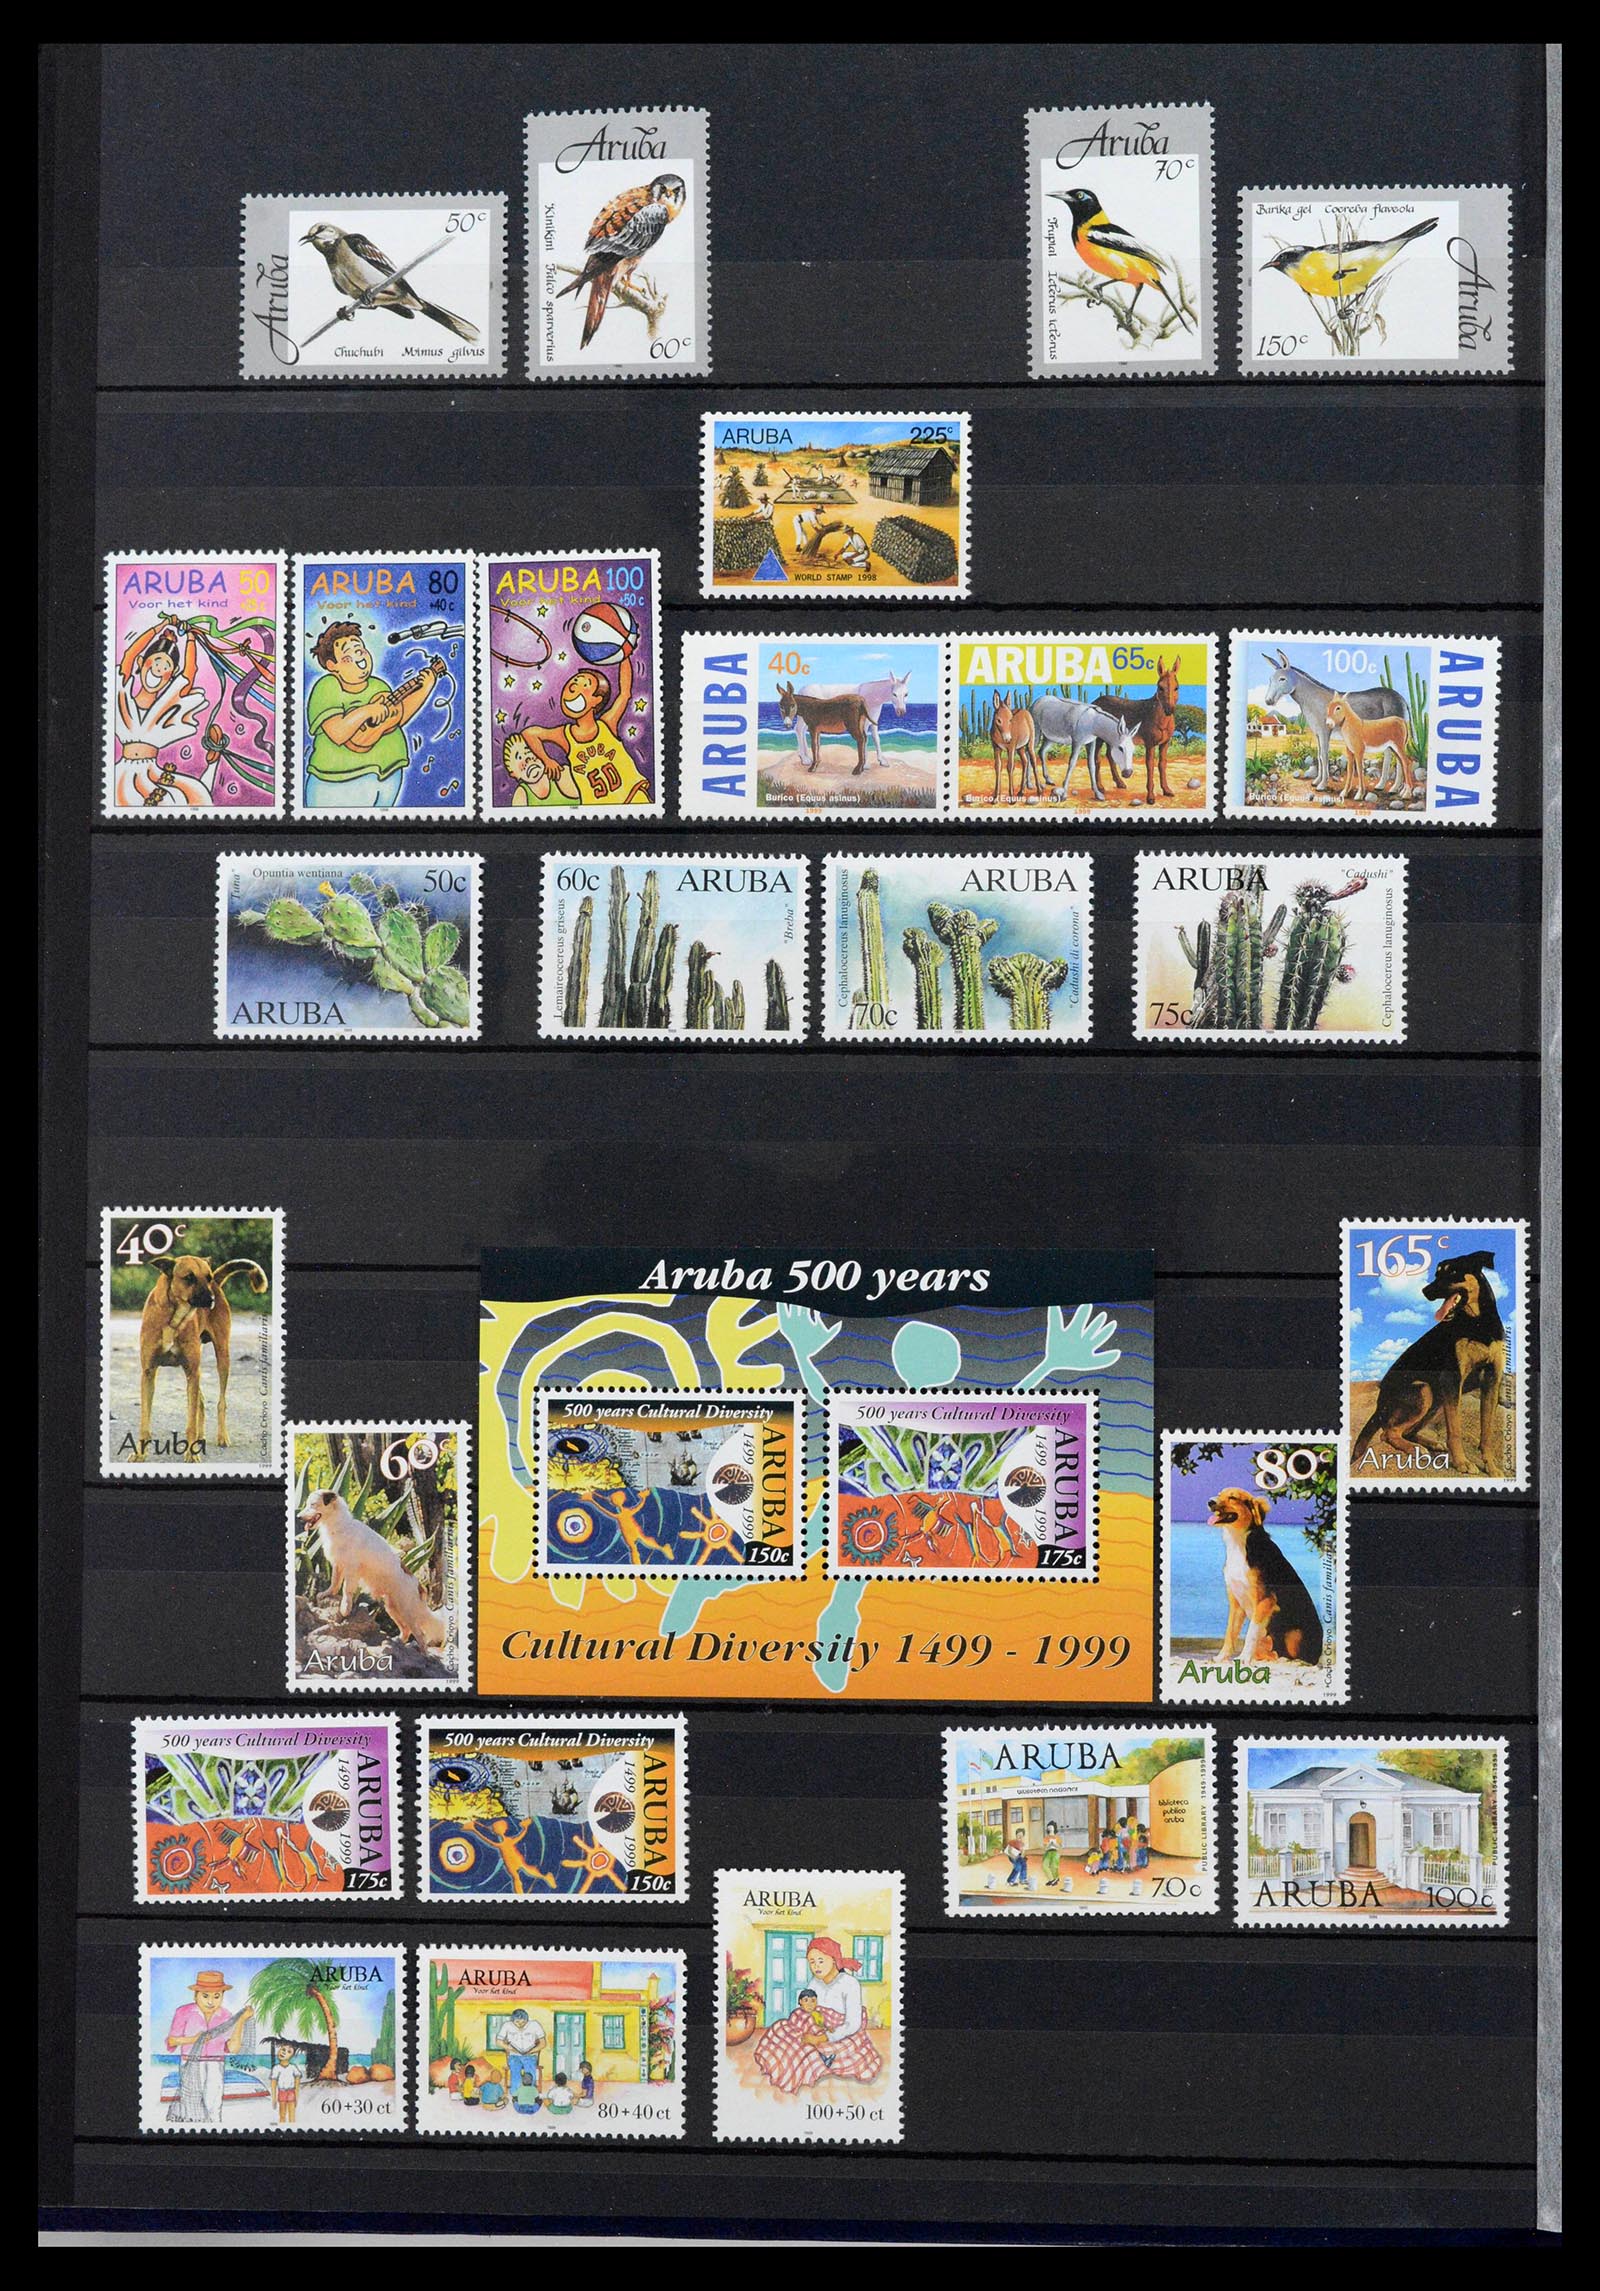 39027 0008 - Stamp collection 39027 Curaçao/Antilles/Aruba 1873-2009.